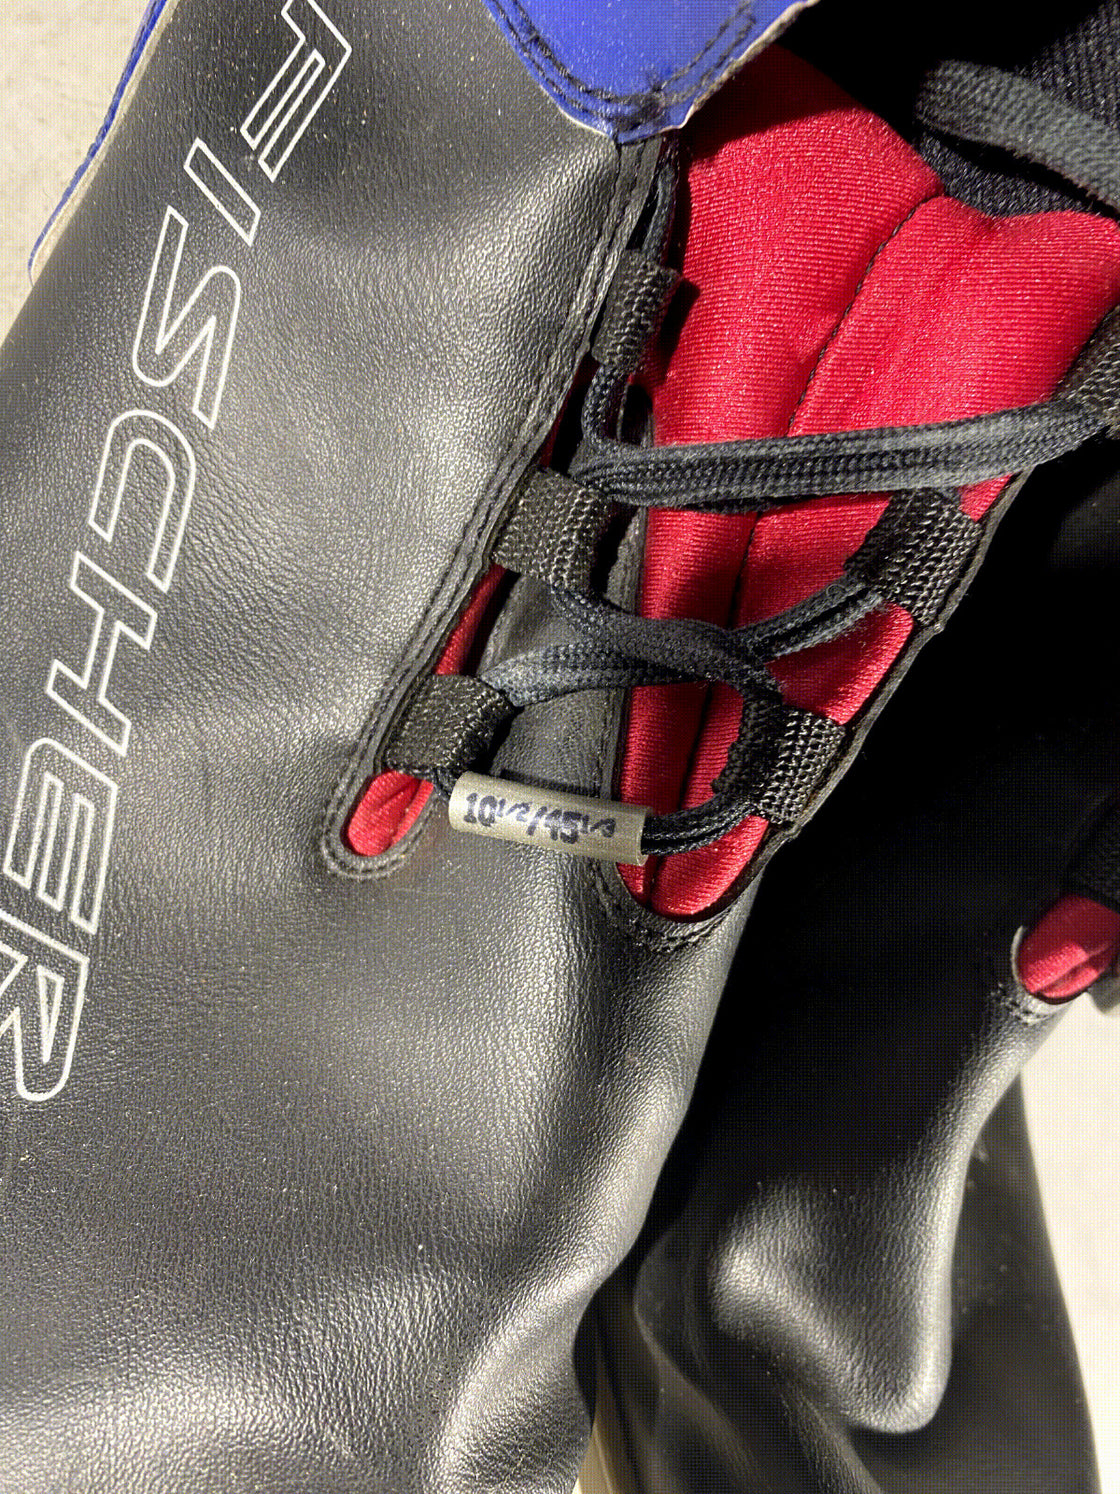 Fischer Classic Nordic Cross Country Ski Boots Size EU45 1/3 US11.5 SNS Profil